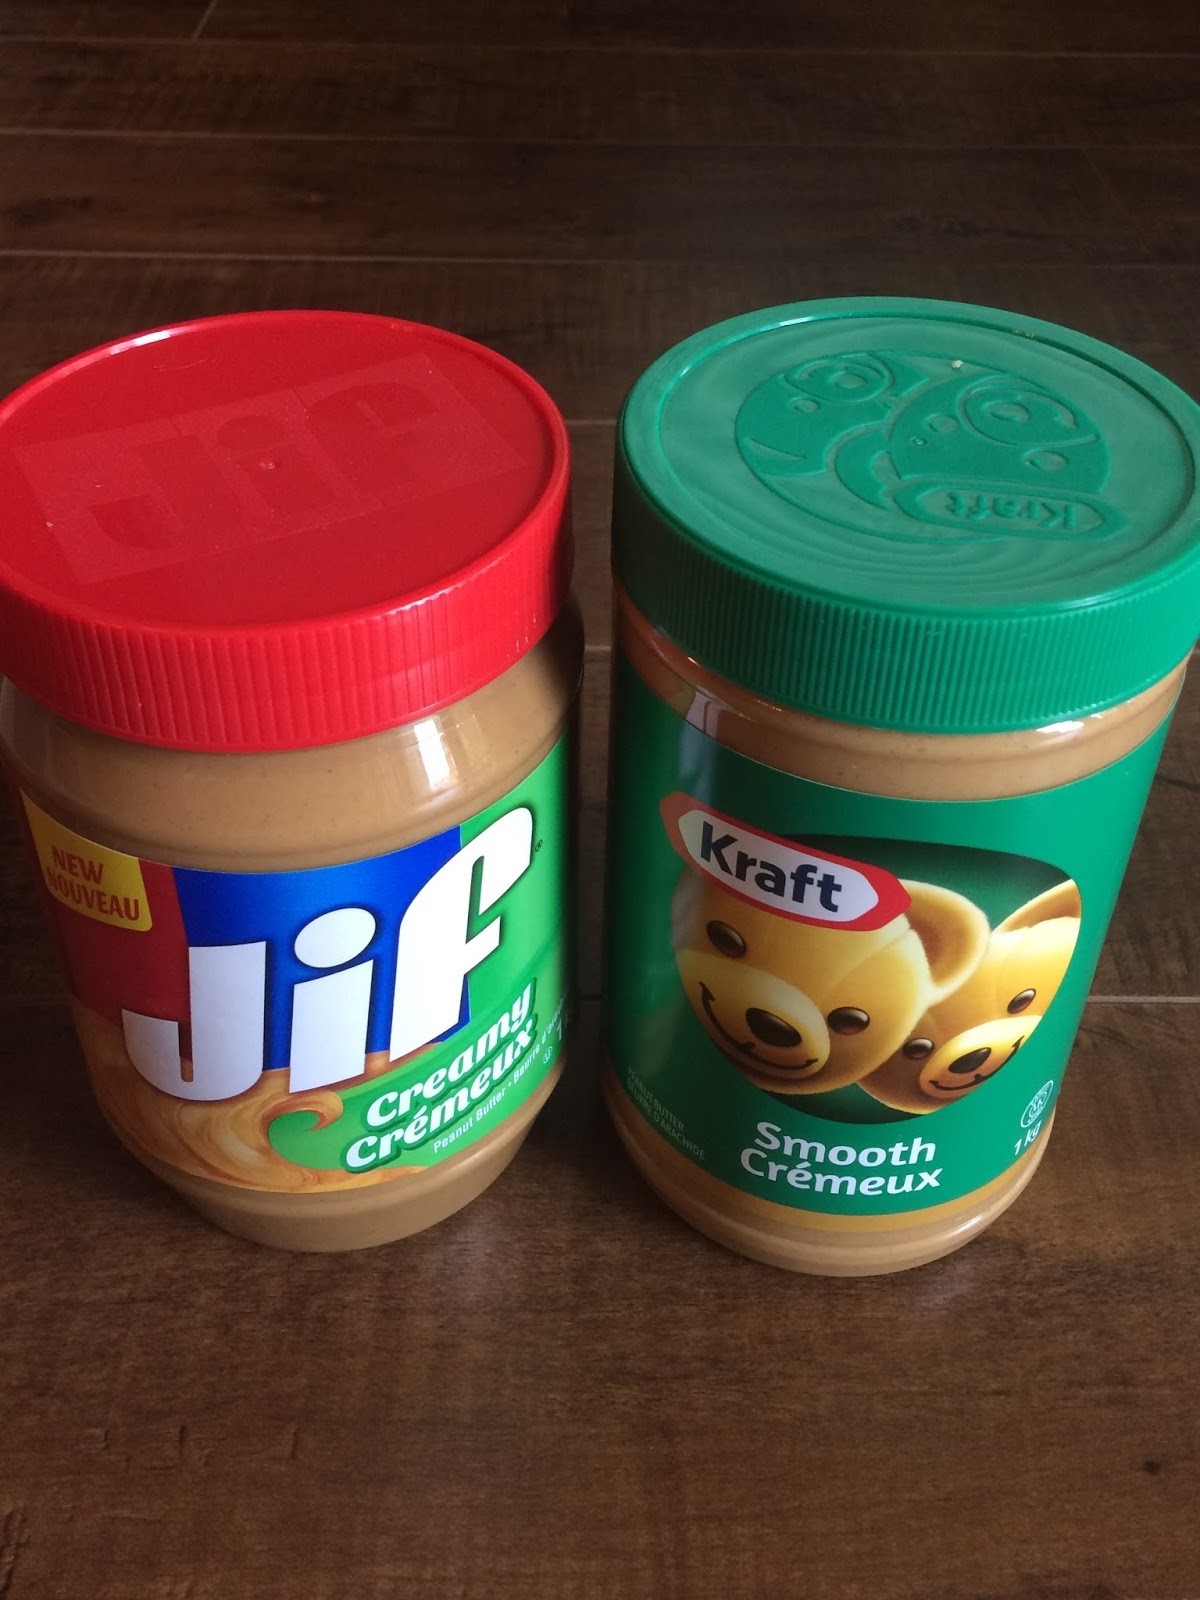 My Tiny Oven: Kraft vs. Jif - A Cookie Comparison